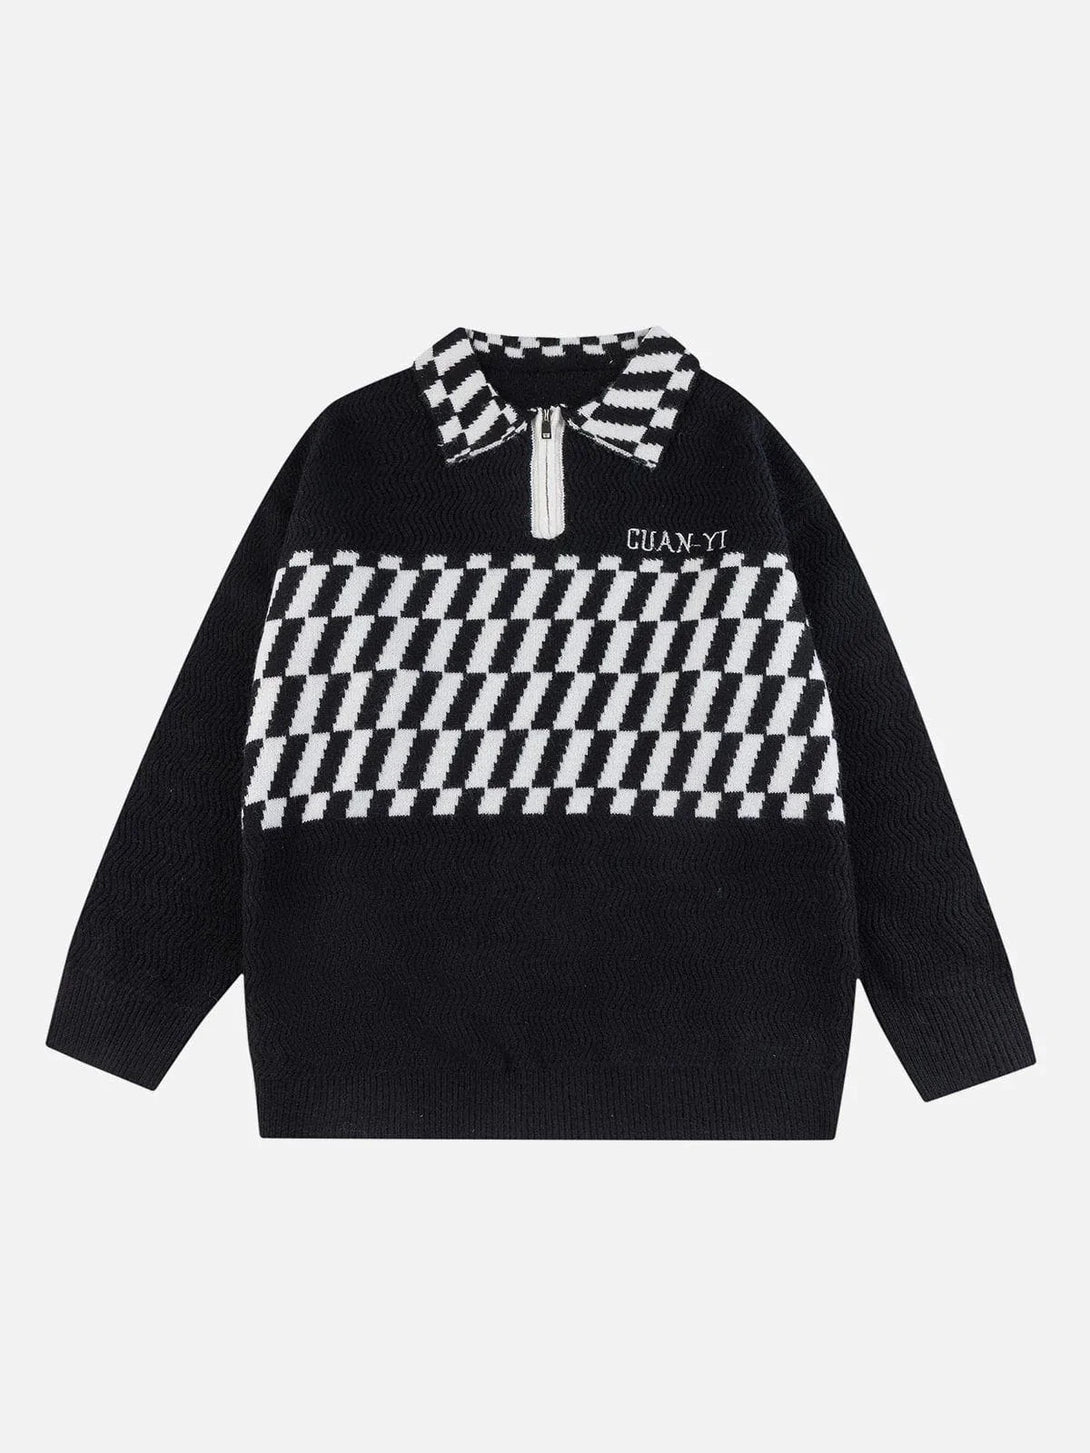 Majesda® - Colorblock Polo Collar Sweater outfit ideas streetwear fashion